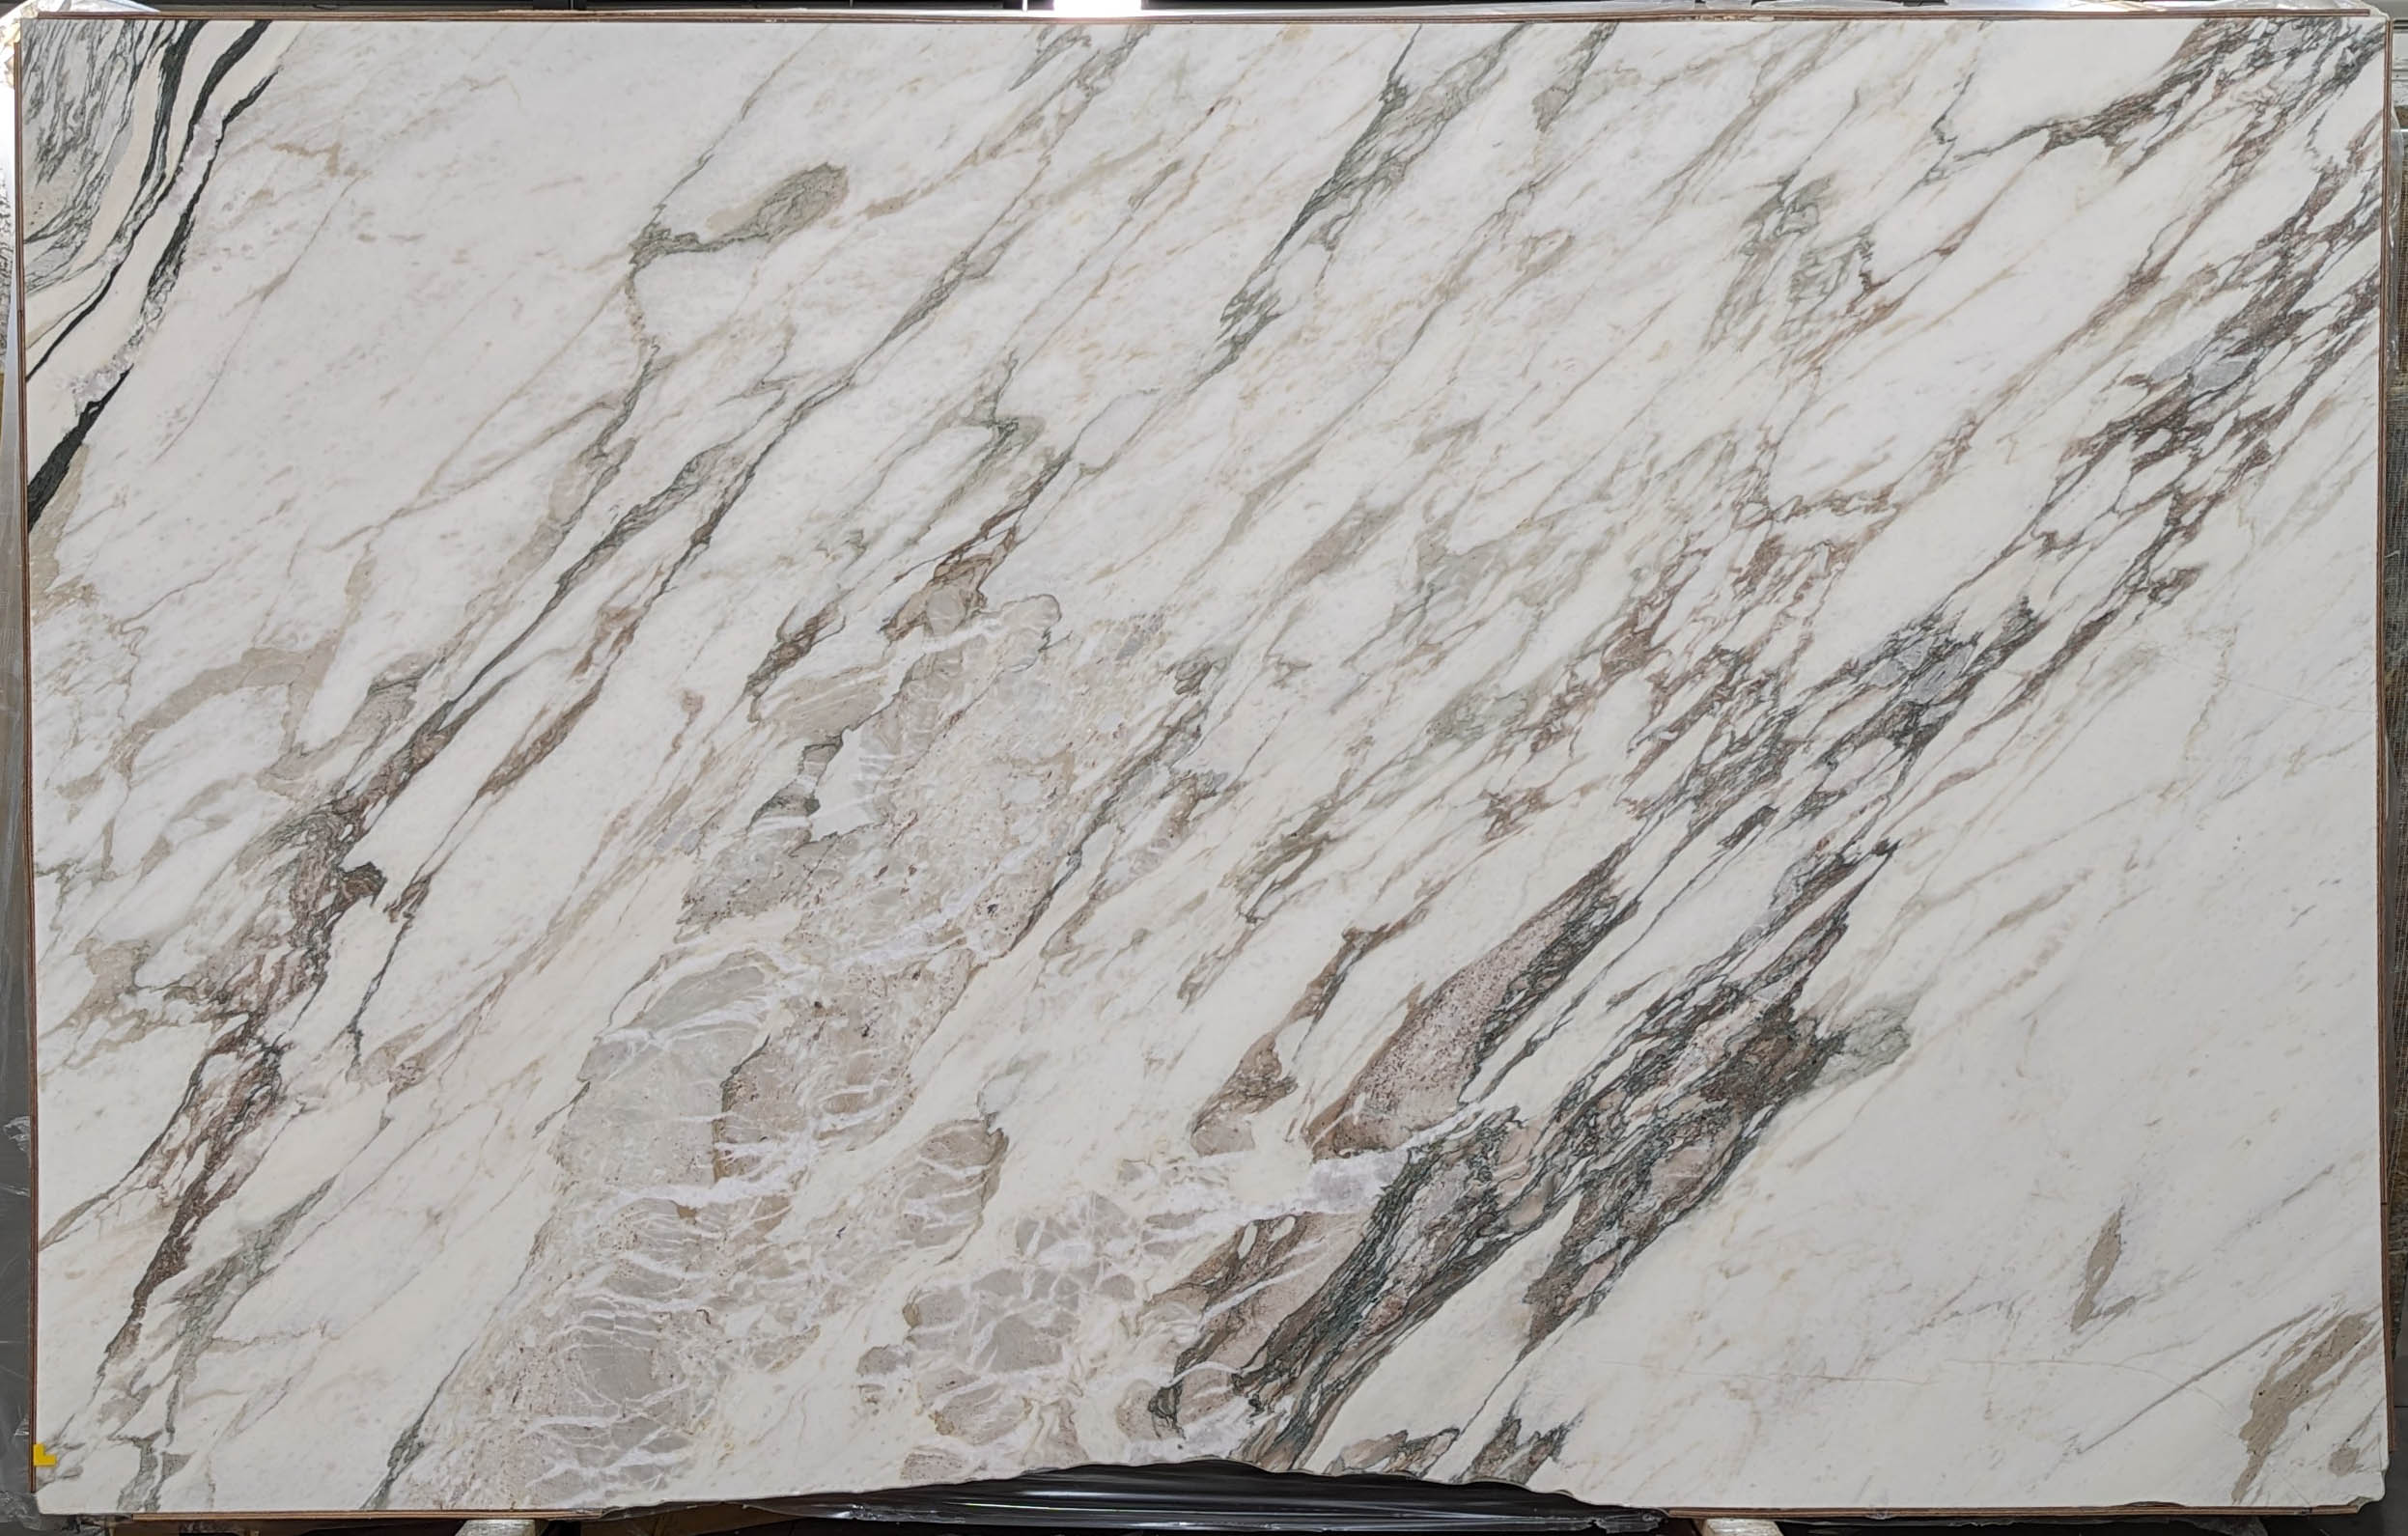  Calacatta Imperiale Marble Slab 3/4  Honed Stone - 4028#17 -  72x119 